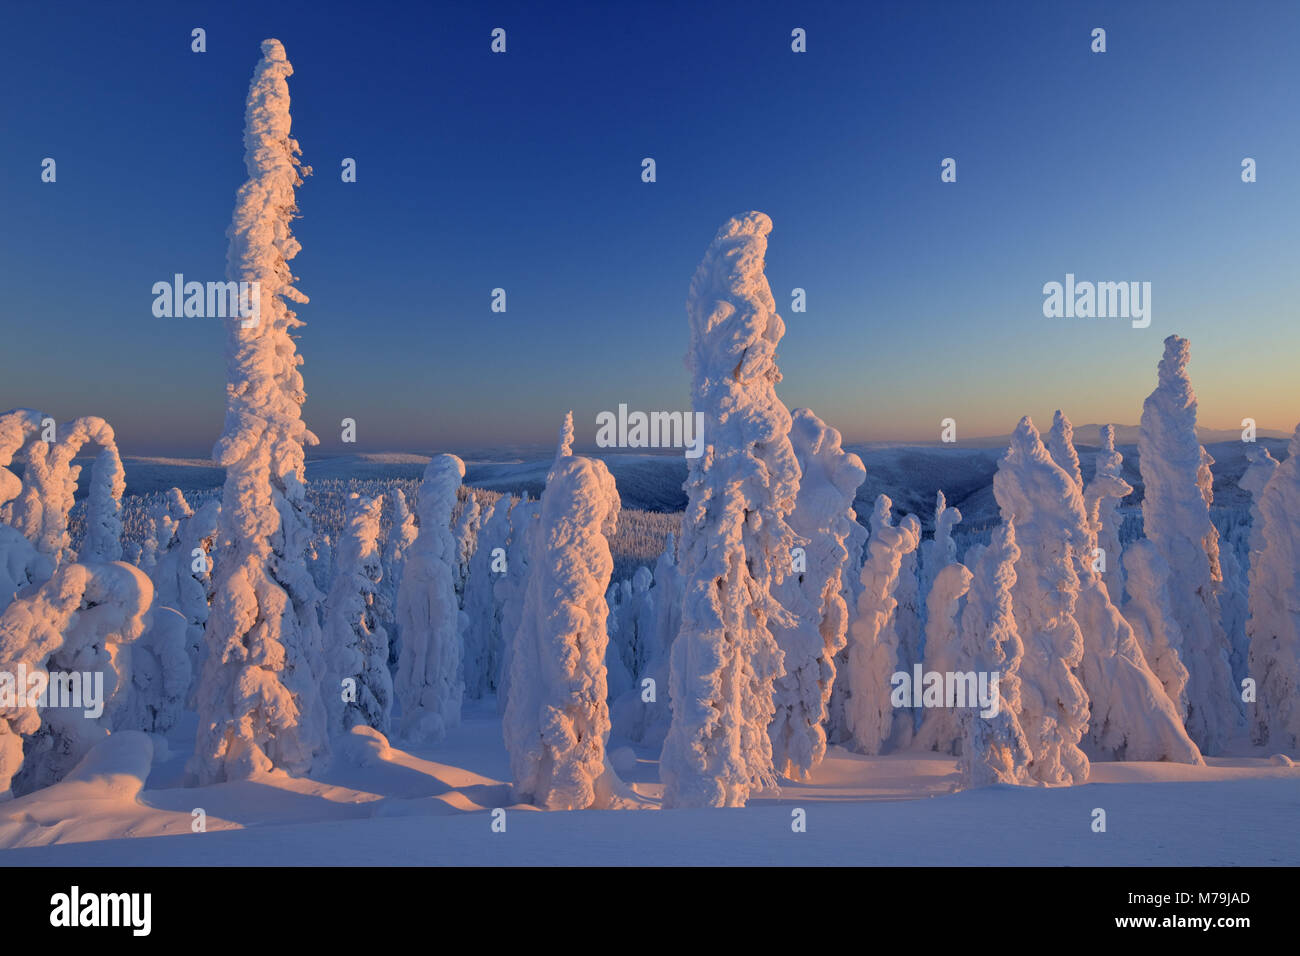 North America, the USA, Alaska, central Alaska, James Dalton Highway, winter scenery, Stock Photo